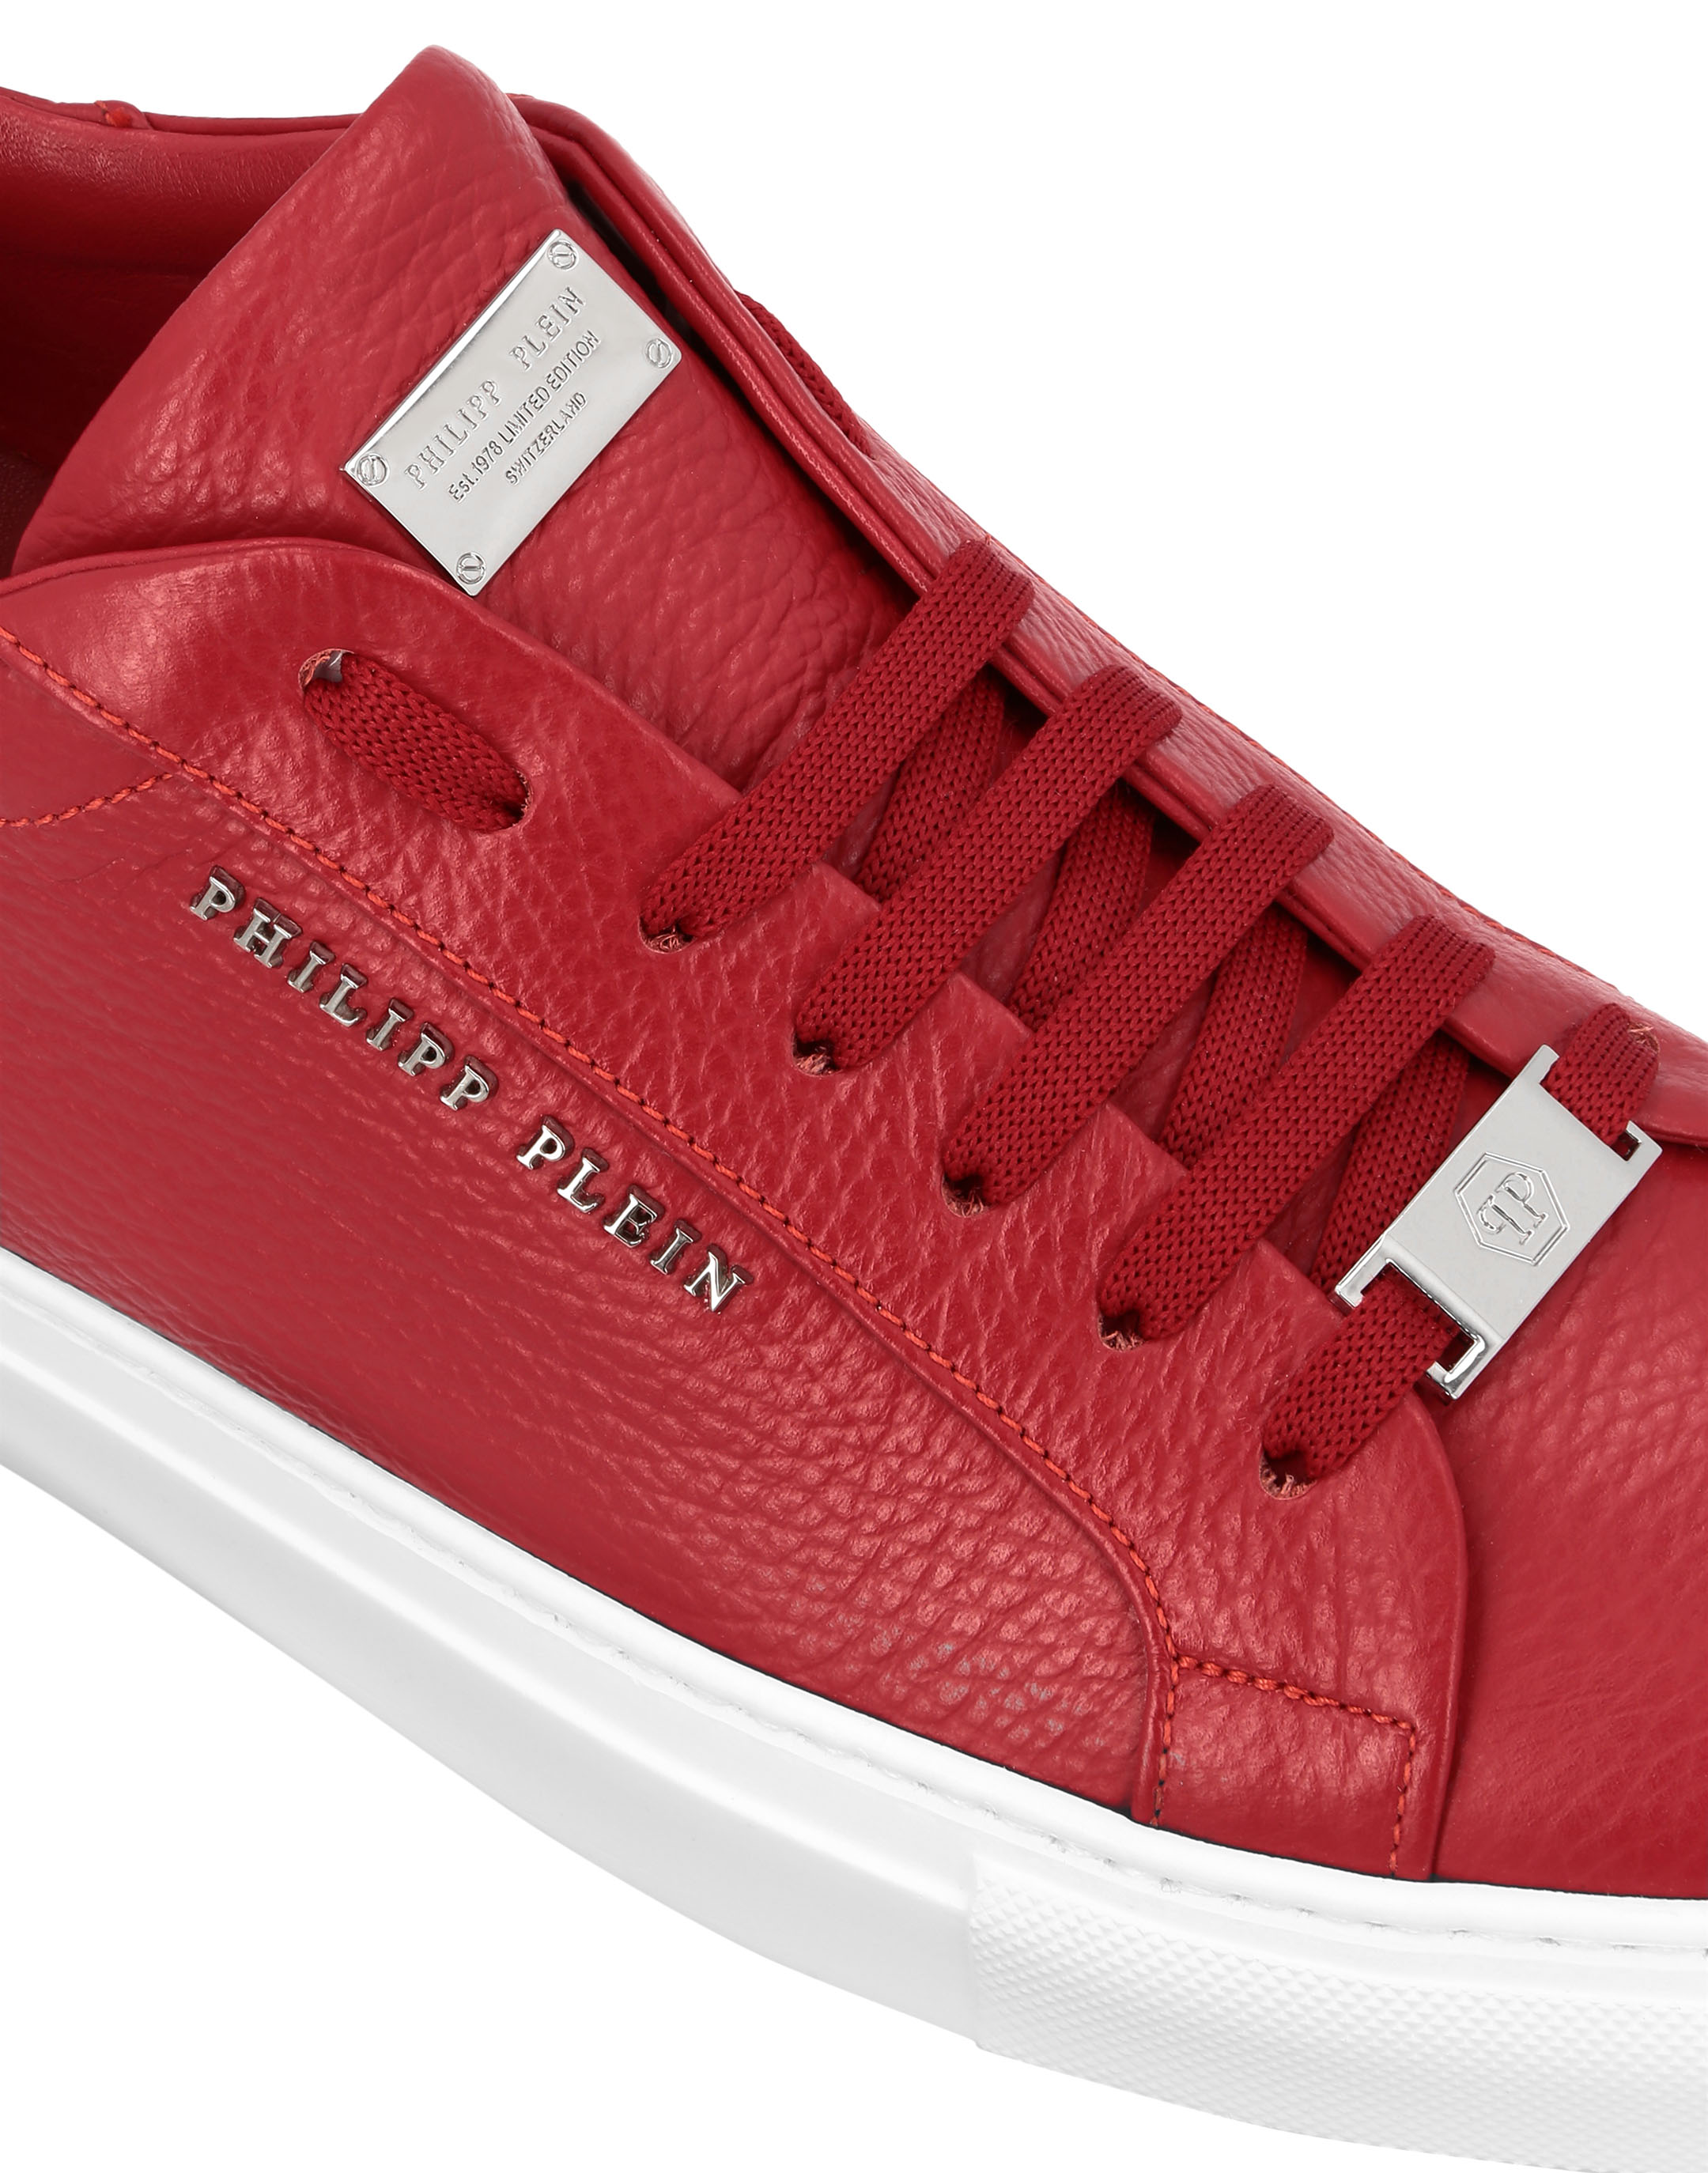 philipp plein sneakers red